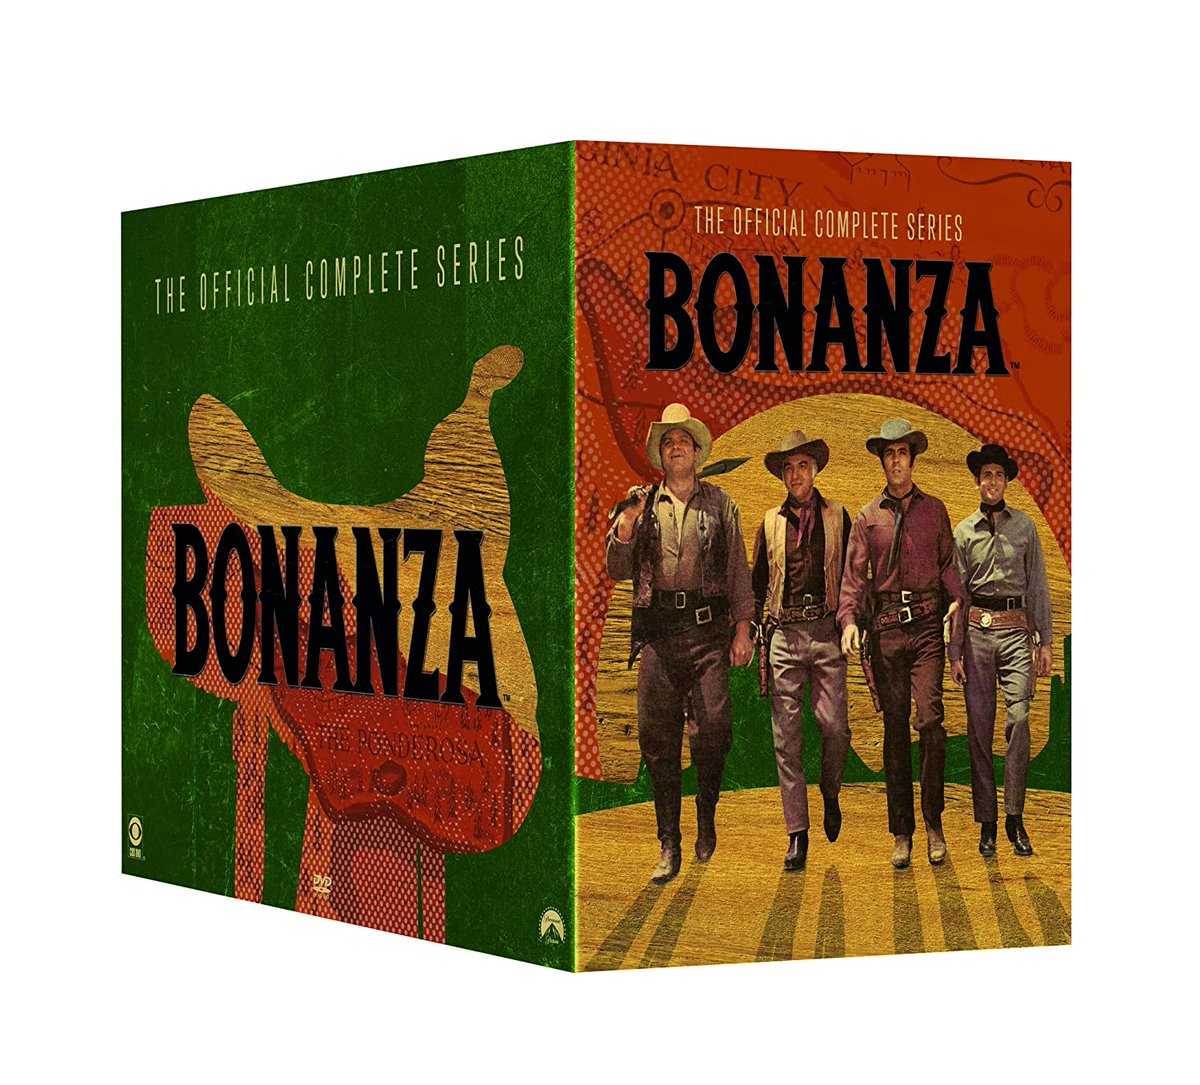 #DVD #PhysicalMedia Isn't Dead - Bonanza: The Official Complete Series Is Good Reason Why 
hdgear.highdefdigest.com/119248/bonanza…